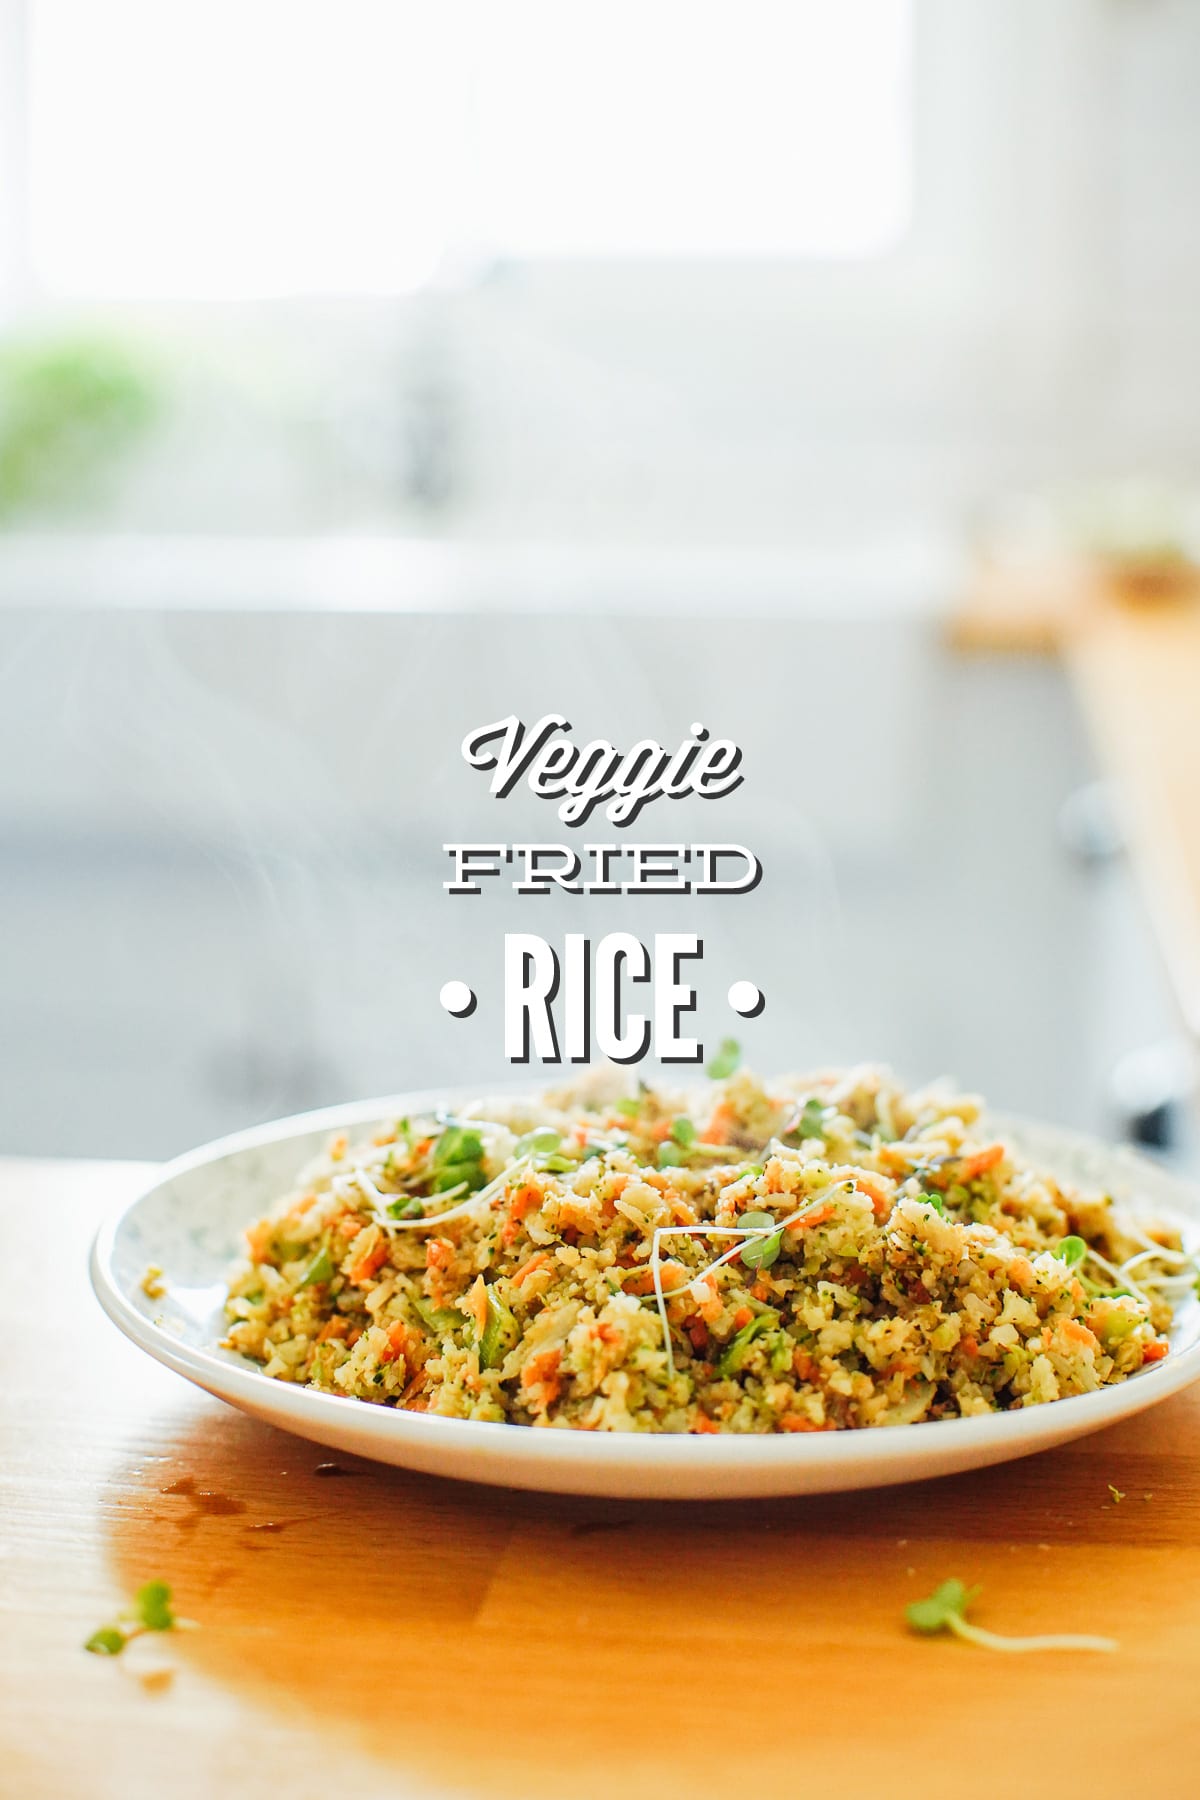 Veggie Fried Rice with Broccoli and Cauliflower (Vegetarian, Egg-Free, Make-Ahead Meal Prep Option)